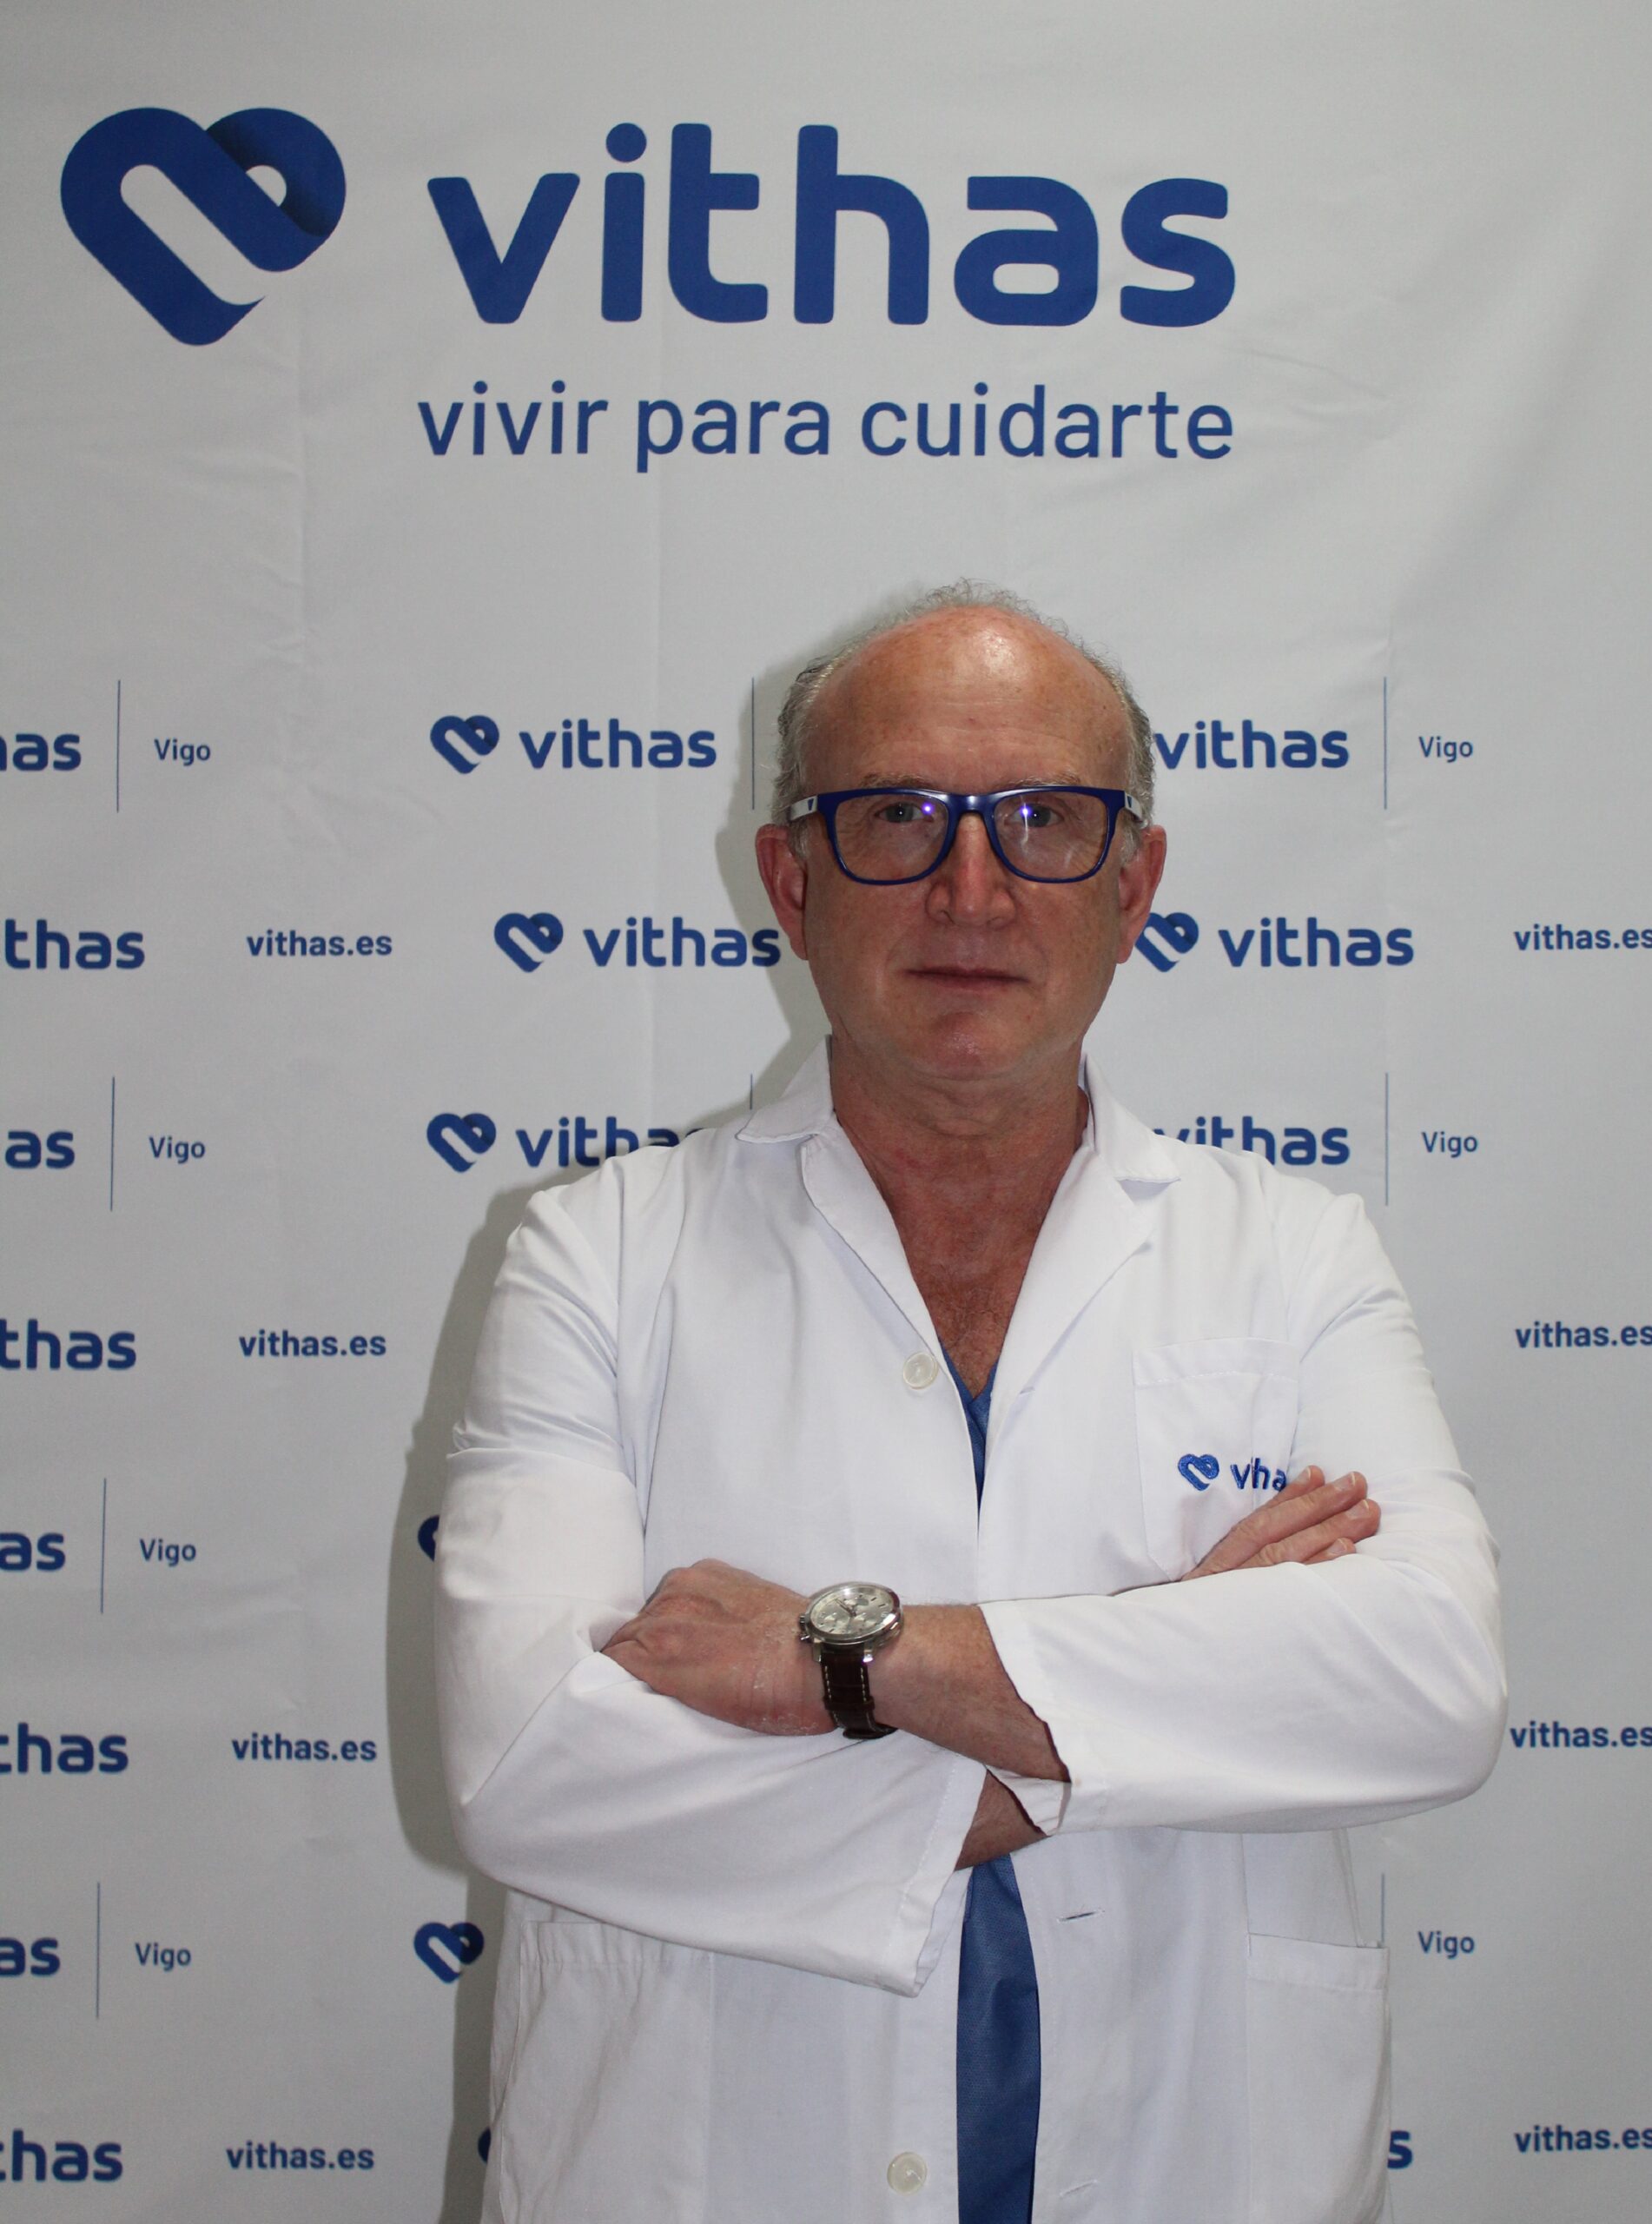 Dr. Alberto Parajó Calvo